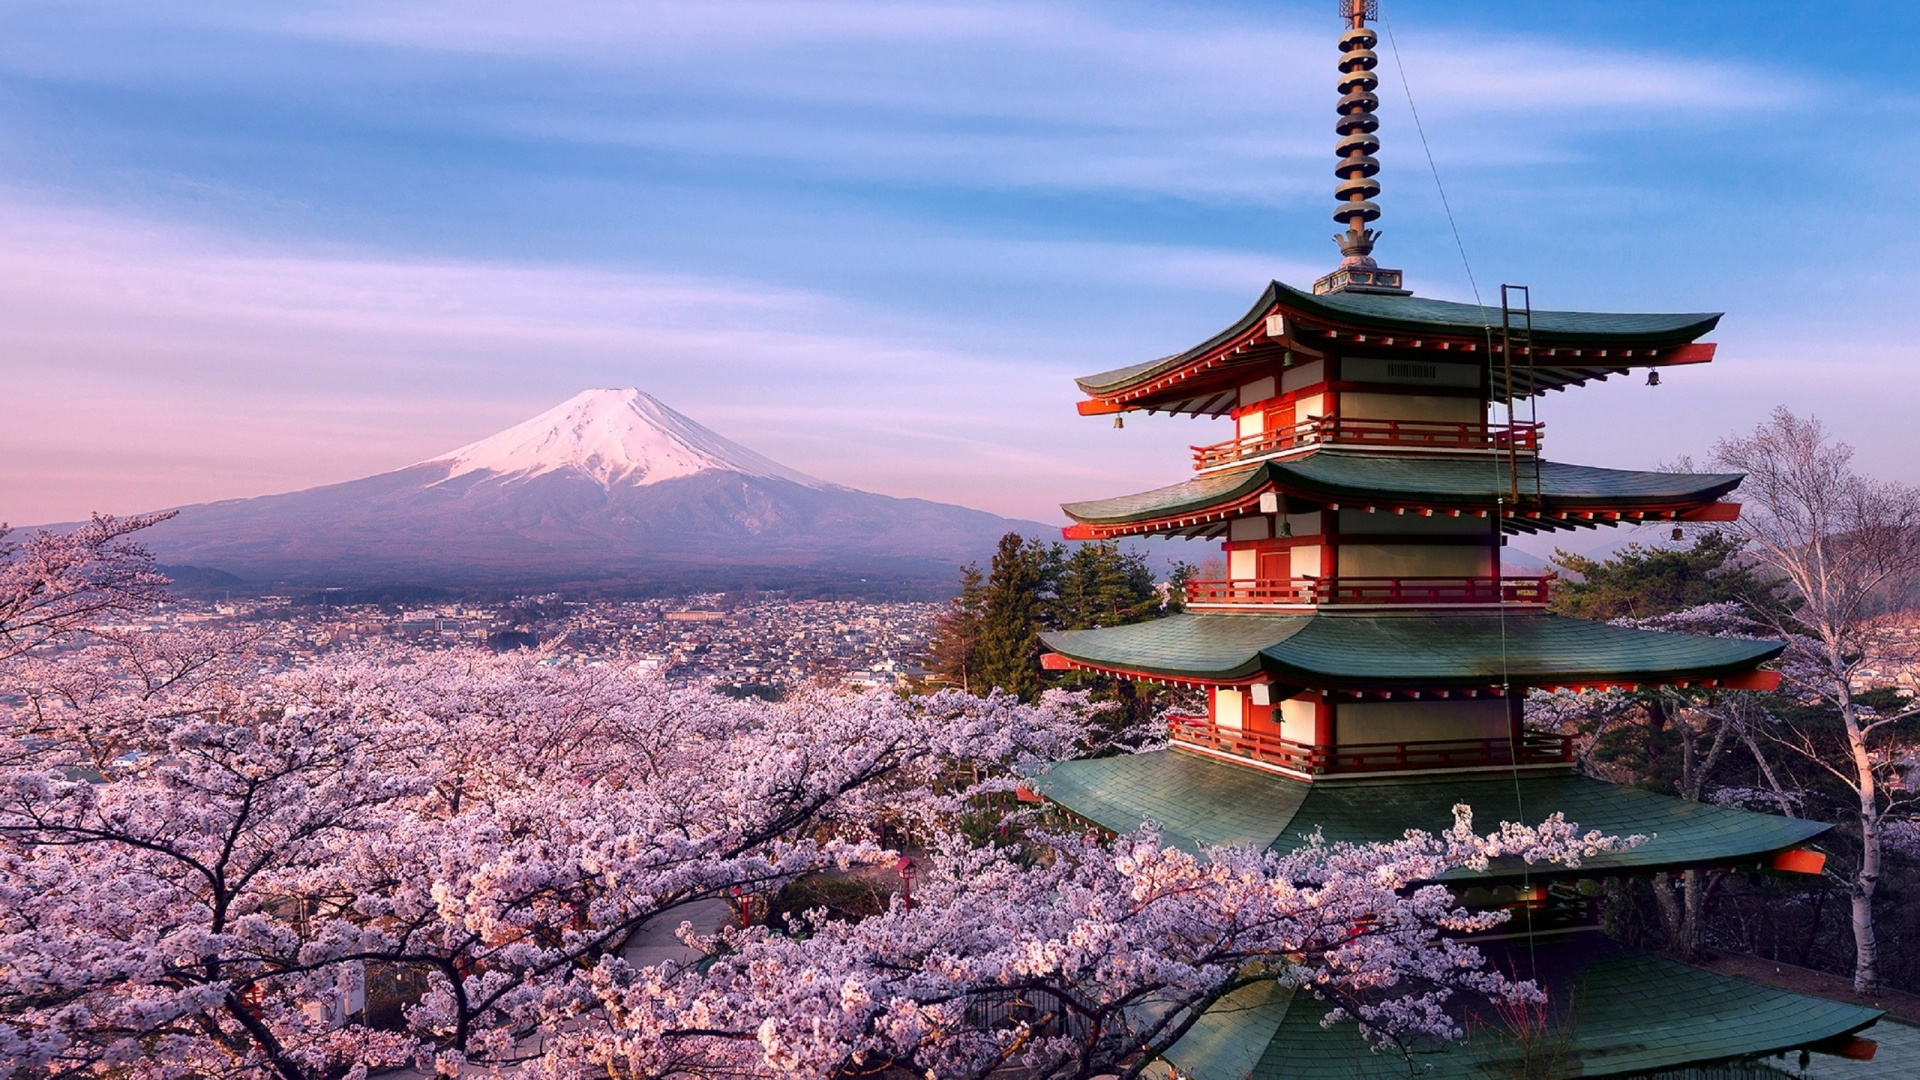 Download 1920x1080 Wallpaper Mountain, Sky, Tourism, Mount Fuji